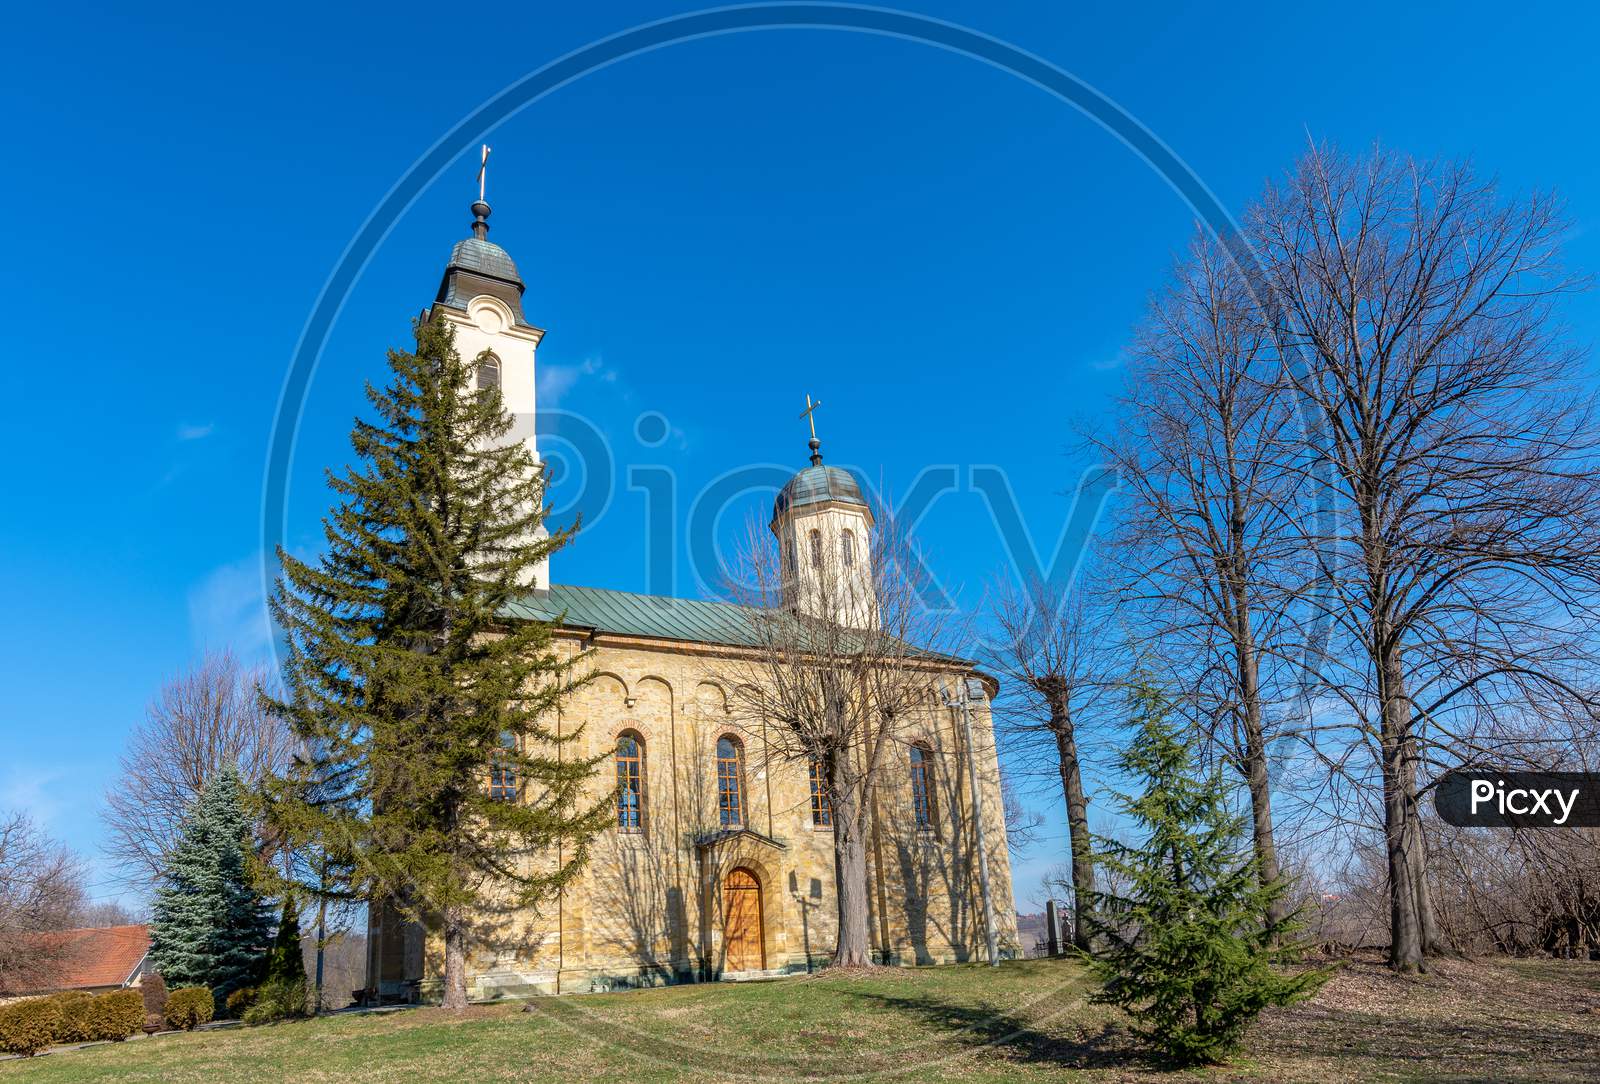 Orthodox Serbian Church Of Saint Apostles Peter And Paul In Kosmaj, Serbia